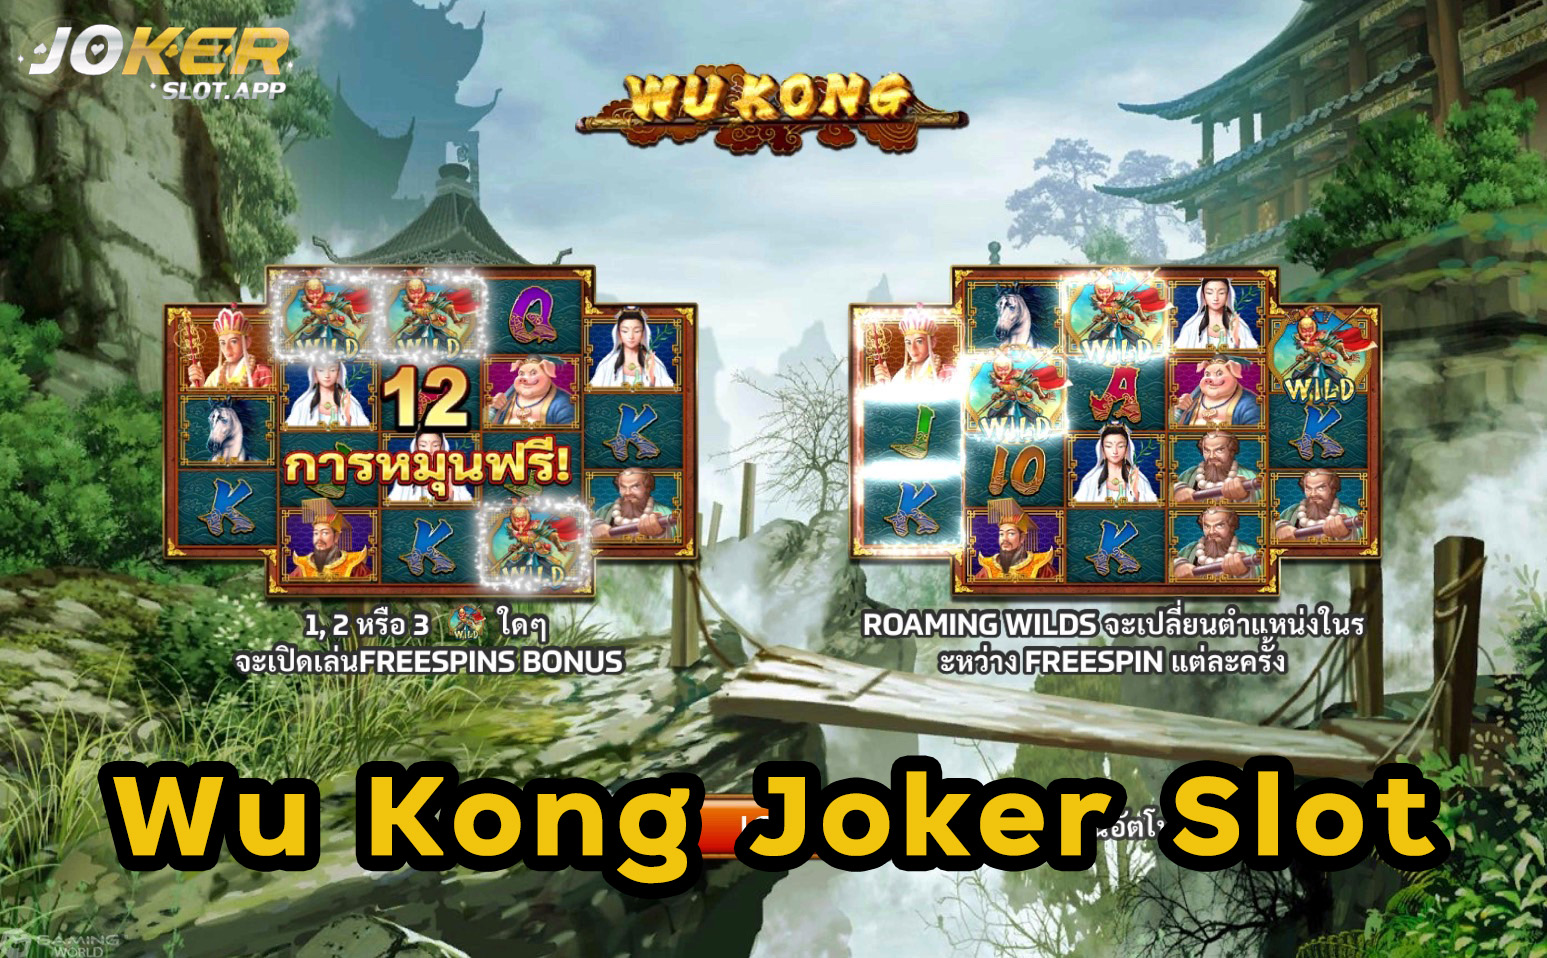 Wu Kong Joker Slot สล็อตไซอิ๋ว เล่นง่าย จ่ายเงินเยอะ